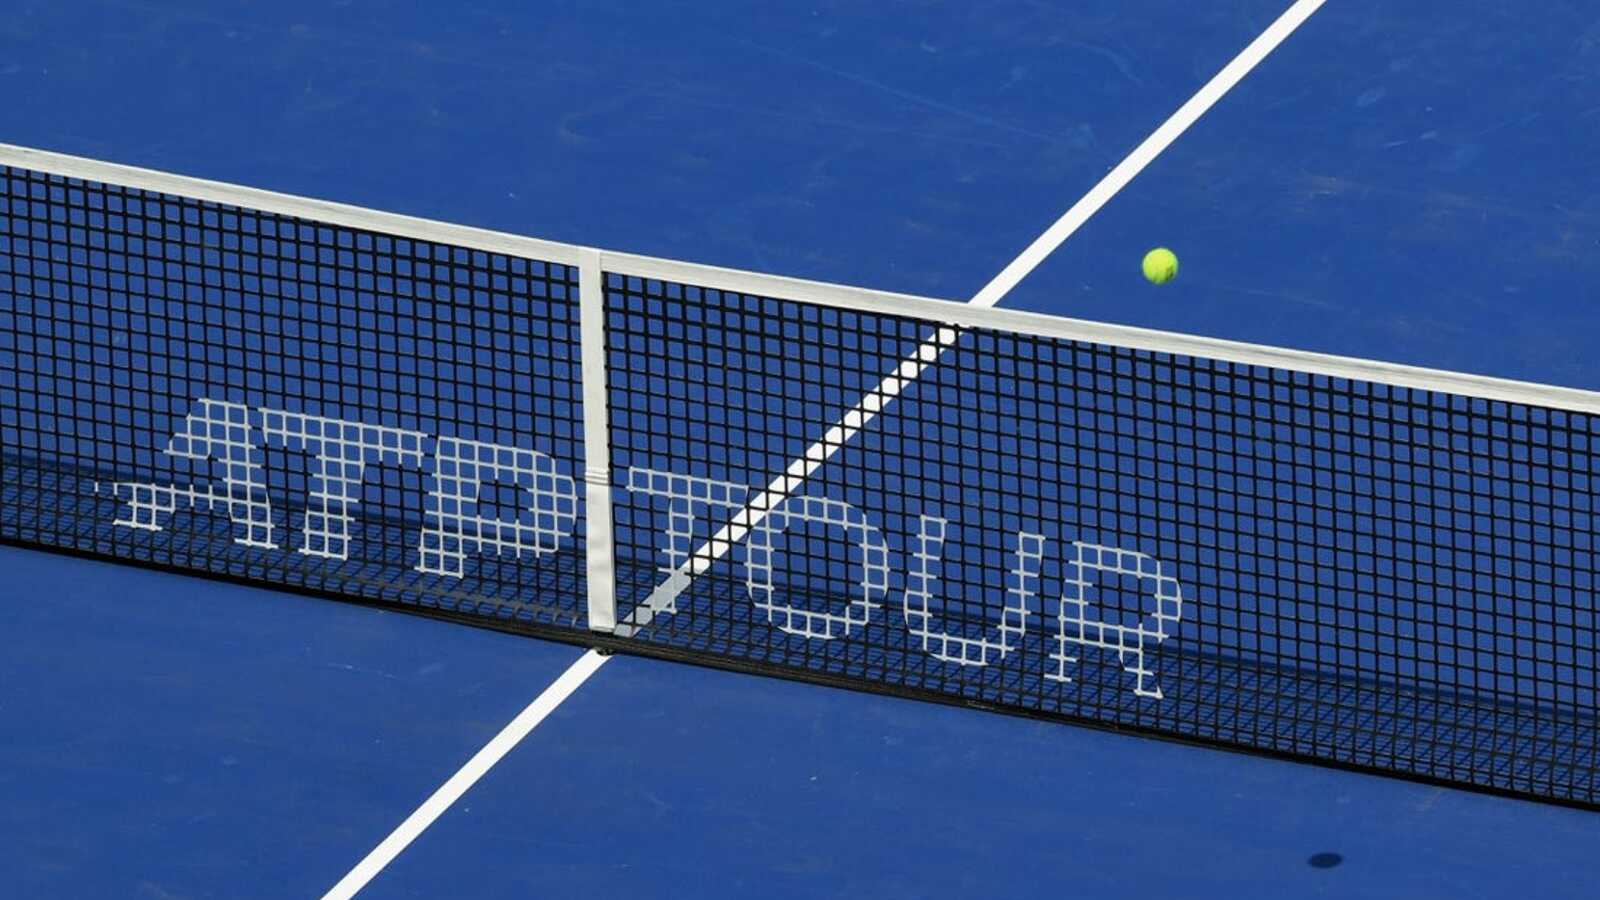 Duke's Omni Kumar earns first ATP win at Winston-Salem